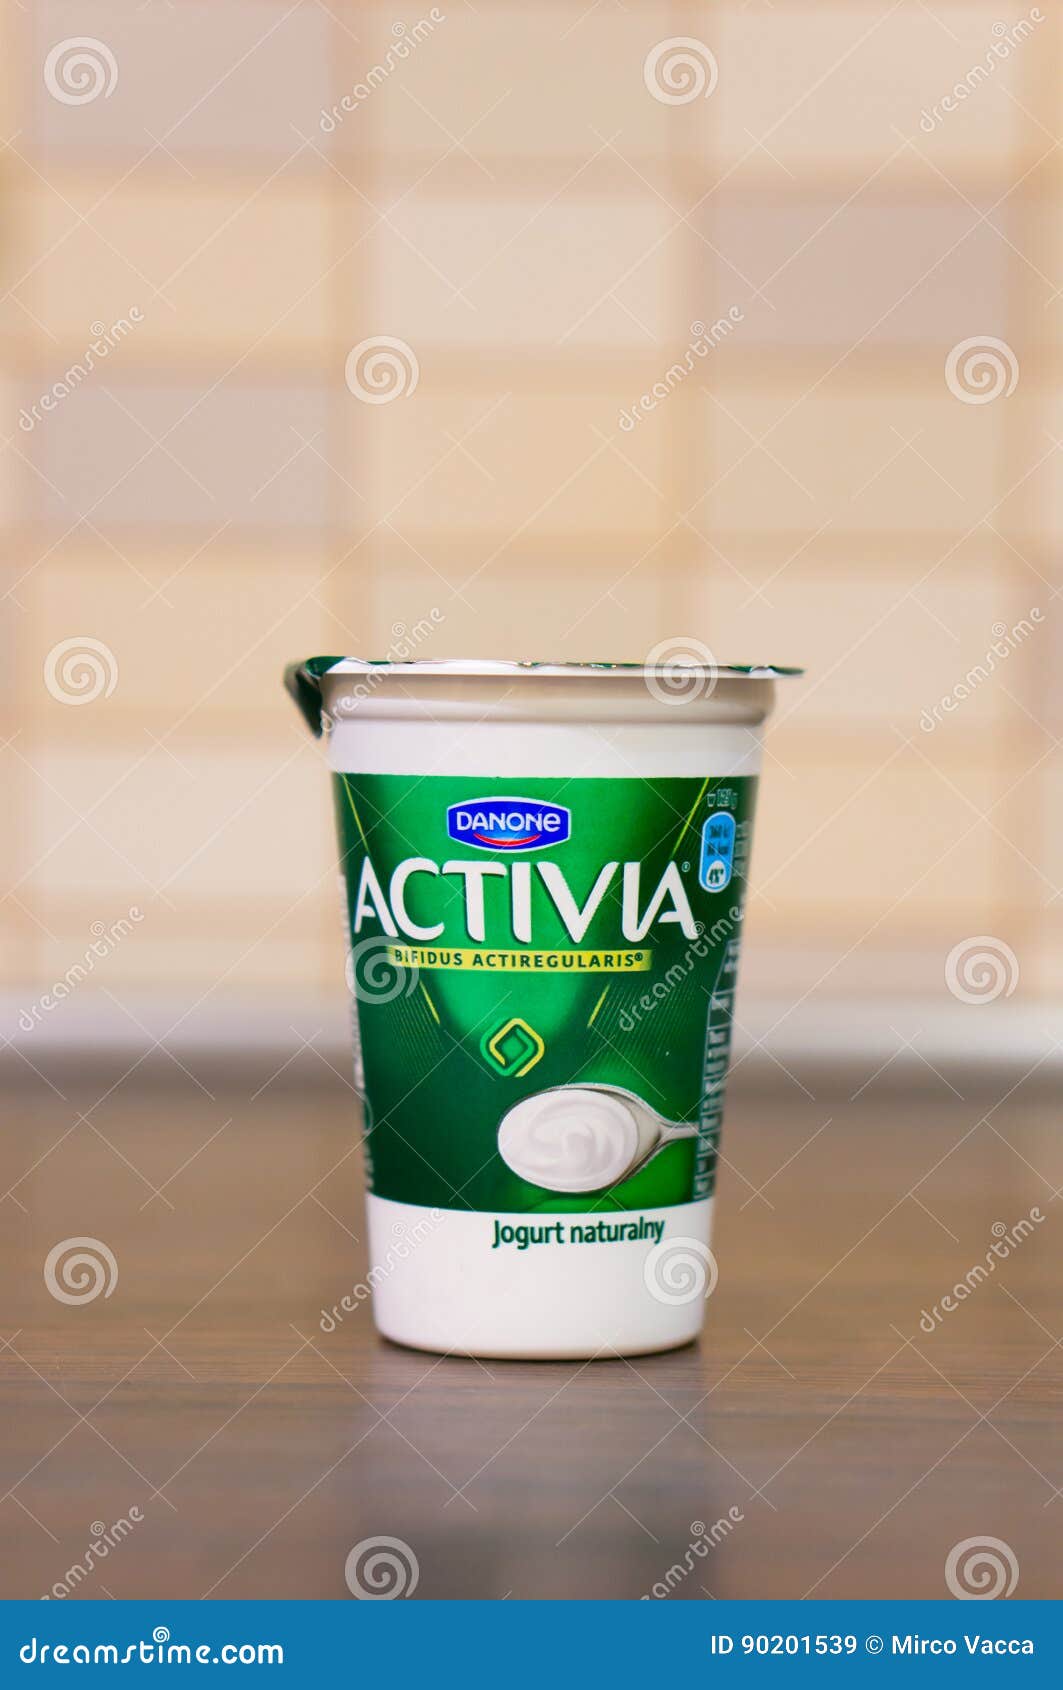 Danone Activia yogurt editorial stock image. Image of food - 90201539 | Billiger Montag